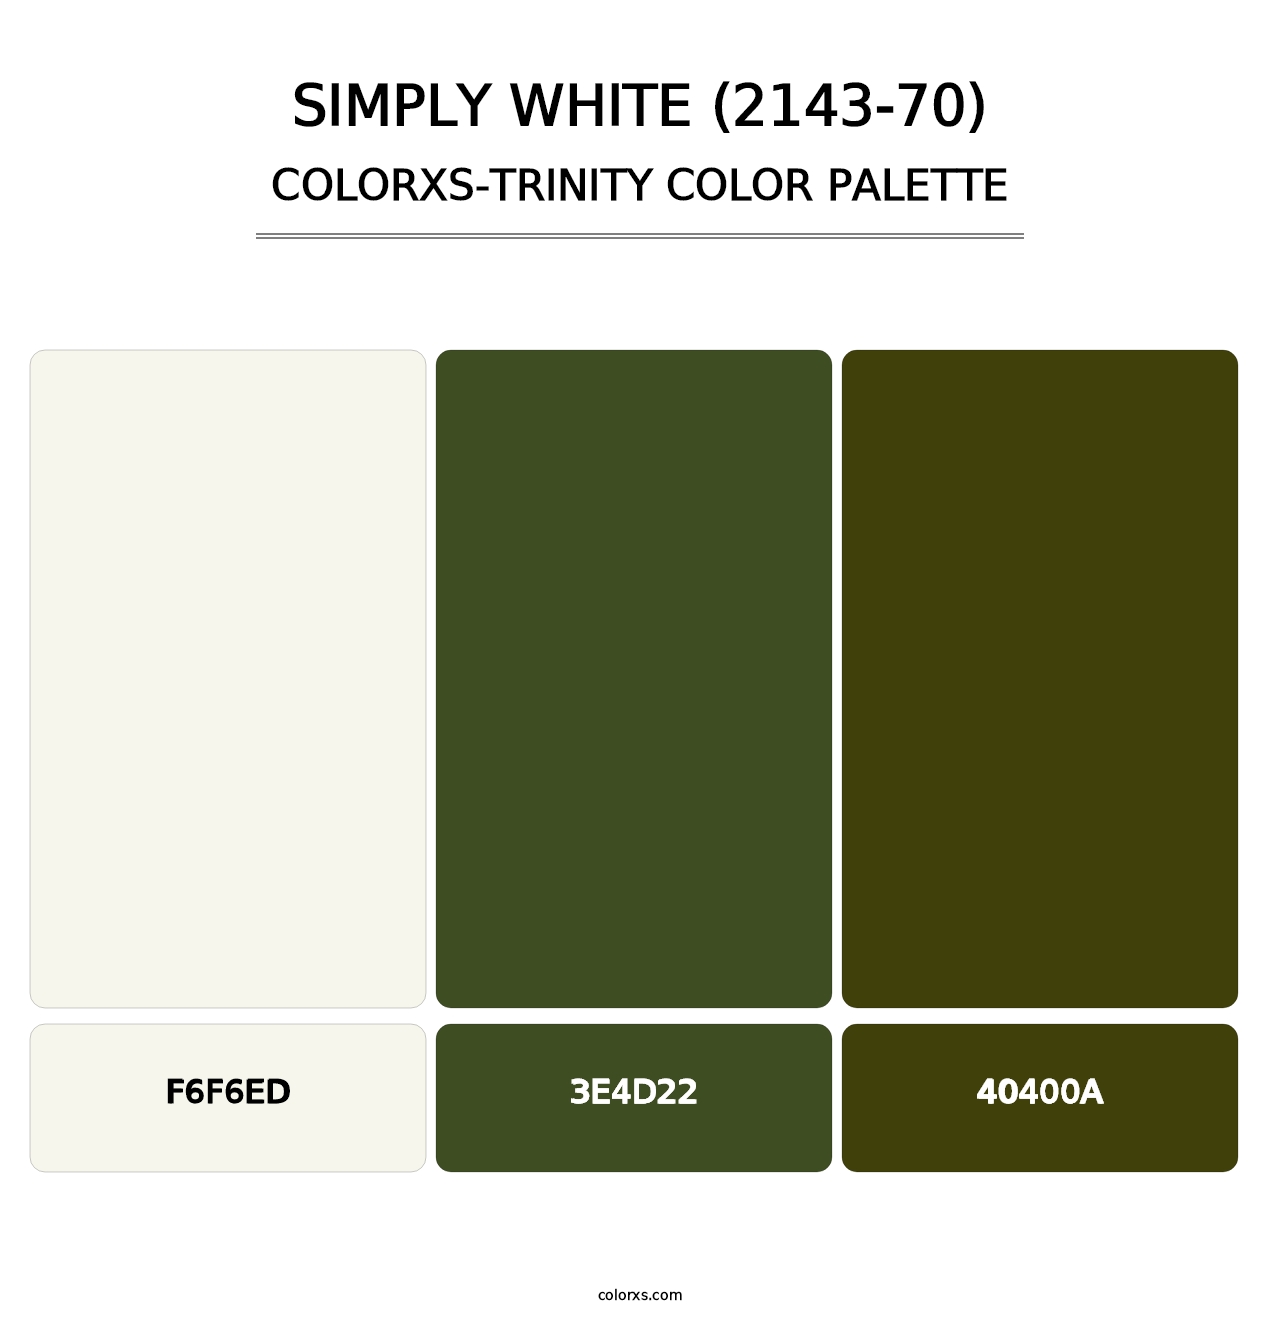 Simply White (2143-70) - Colorxs Trinity Palette